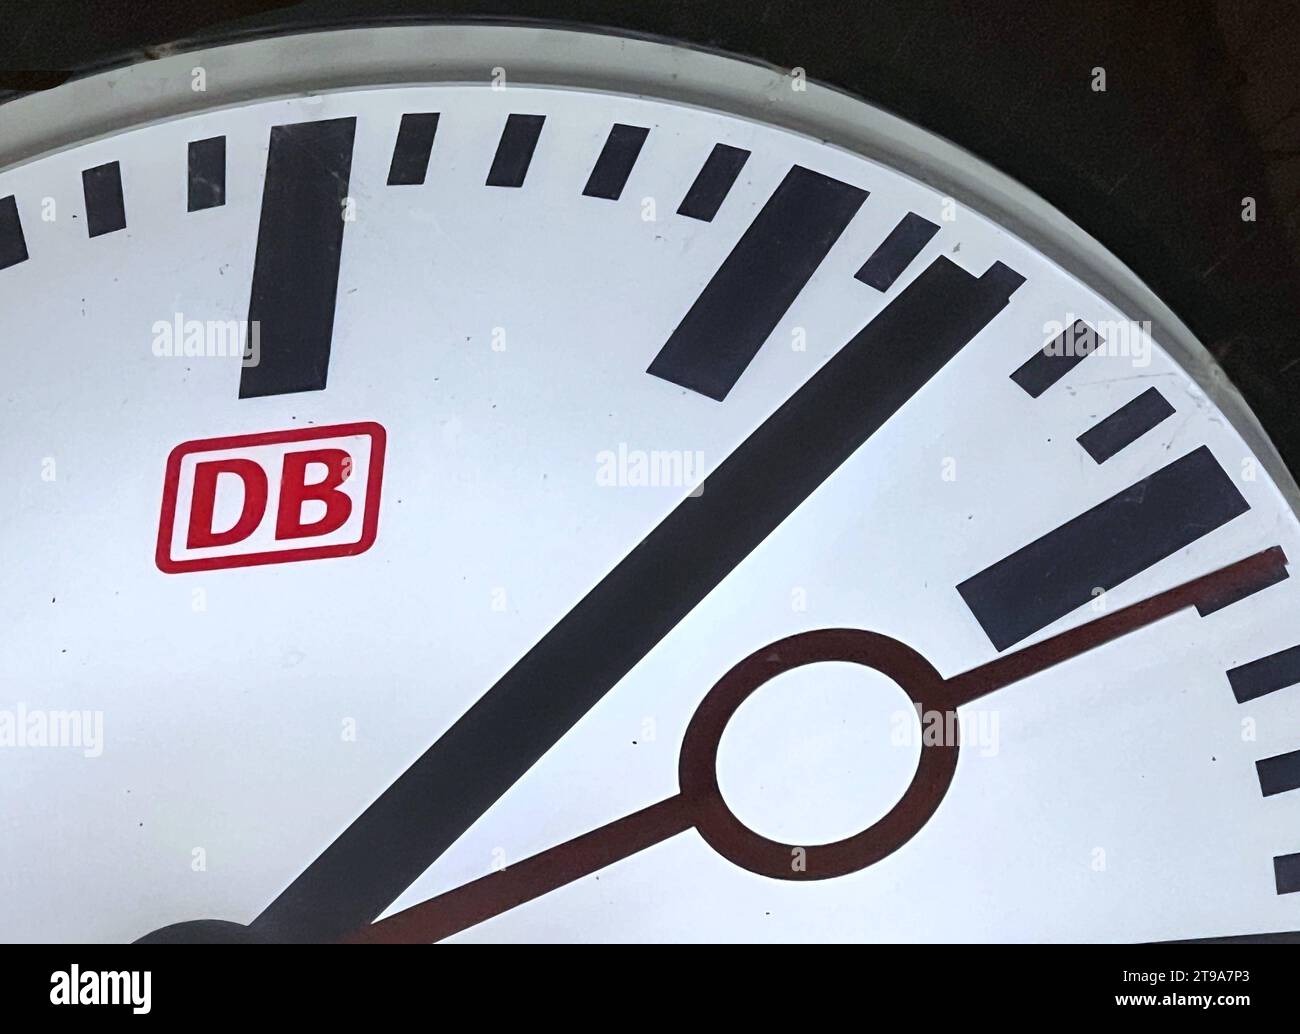 Bahnhofsuhr DB Deutsche Bahn Uhrzeit Uhrzeiger *** horloge de la gare DB Deutsche Bahn horloge heure main Copyright : xmix1x crédit : Imago/Alamy Live News Banque D'Images